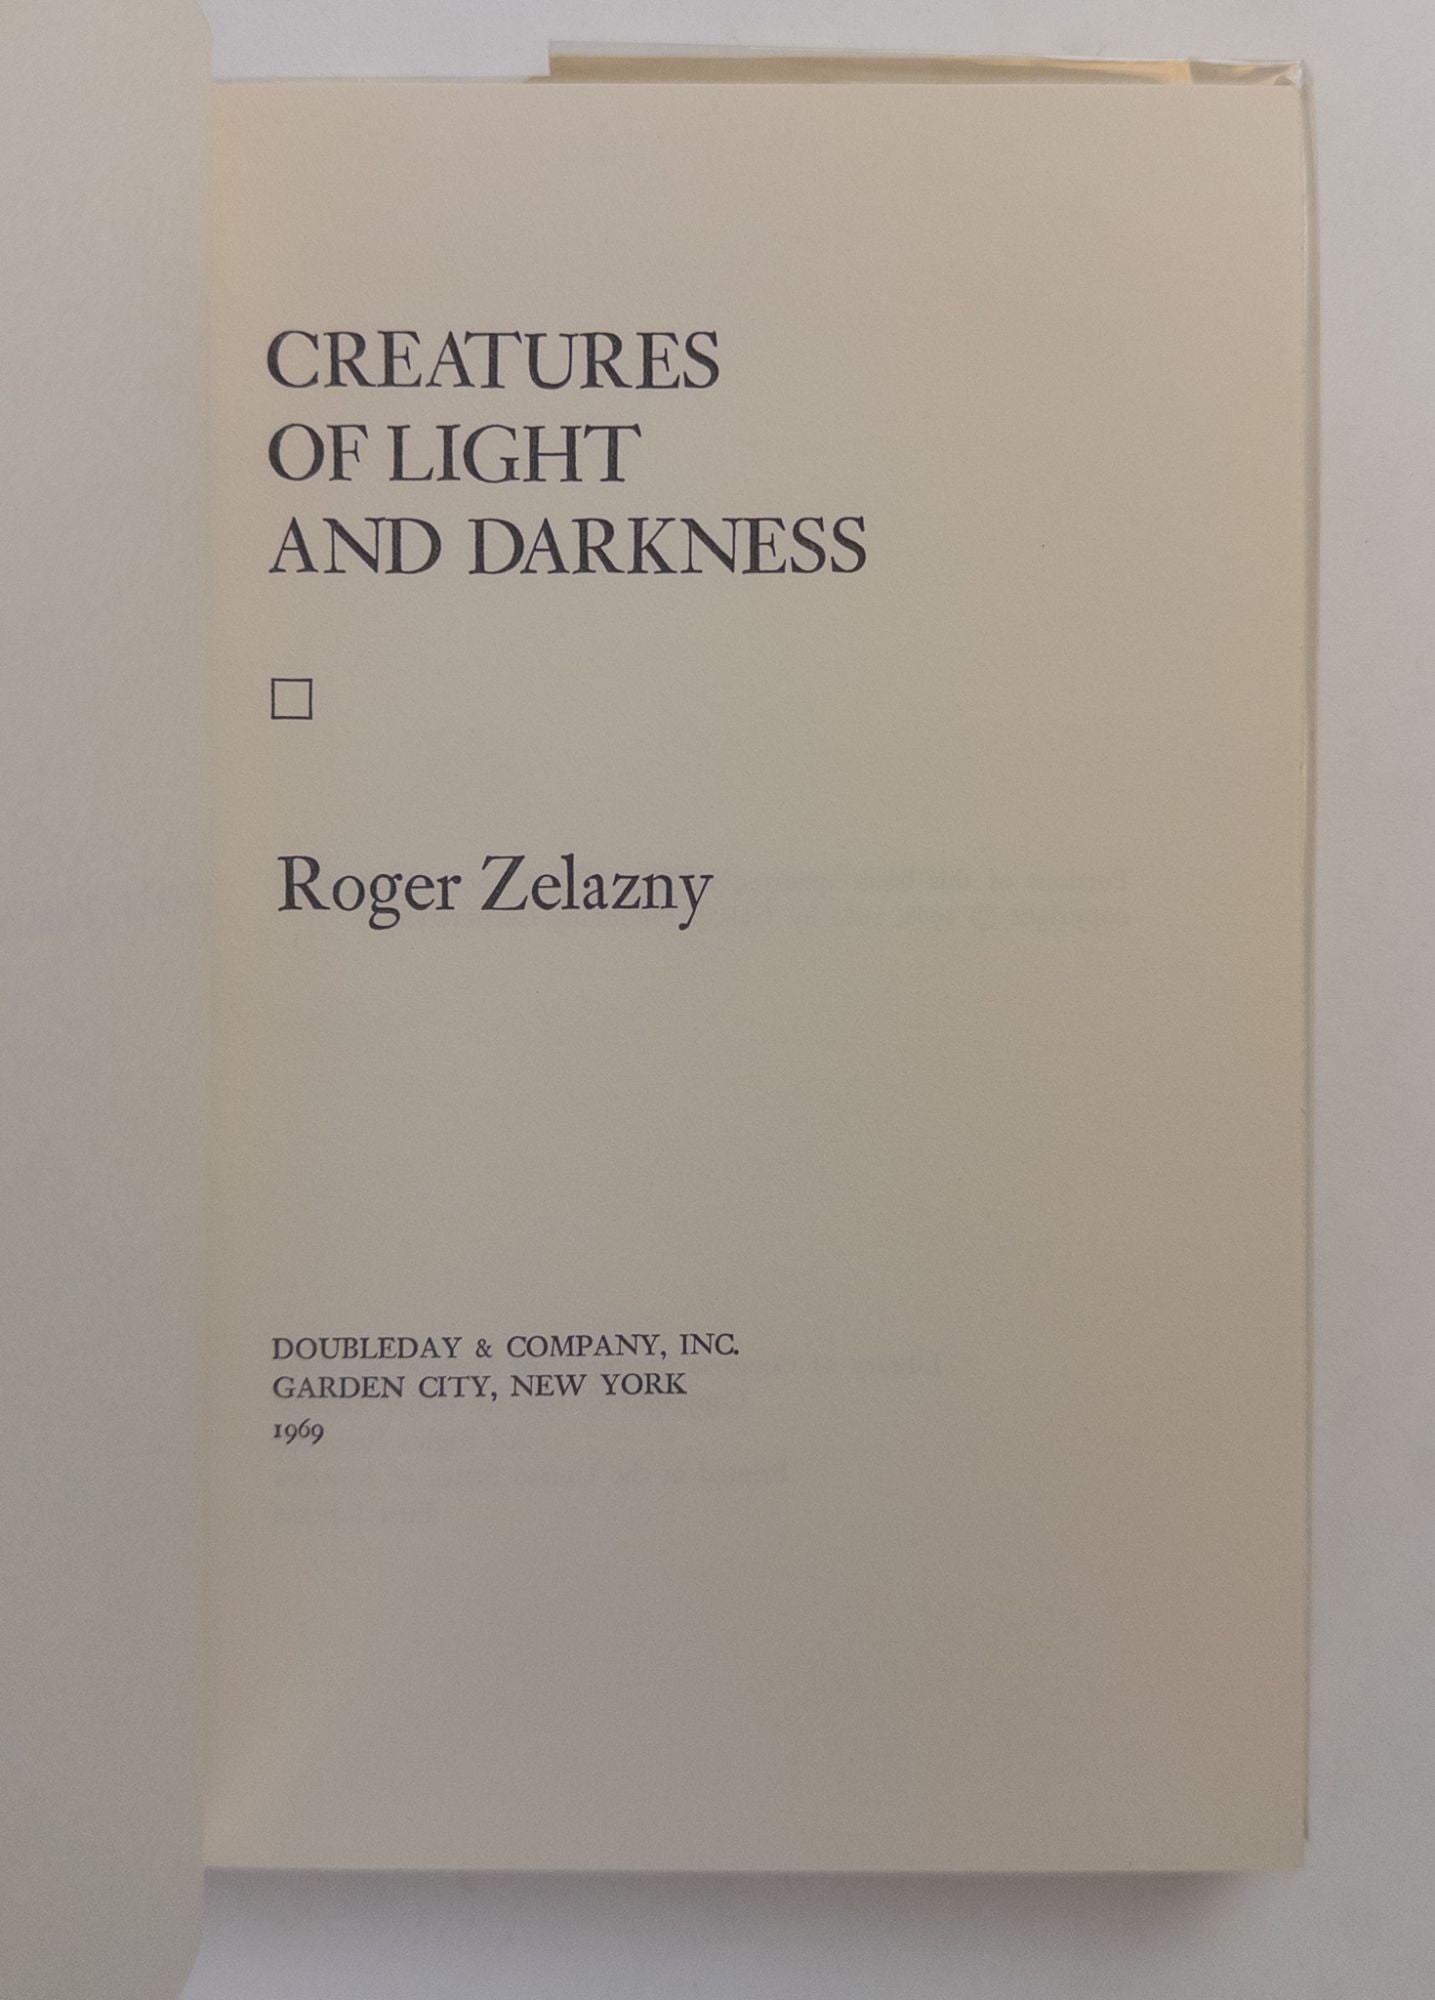 Roger Zelazny, Creatures of Light and Darkness